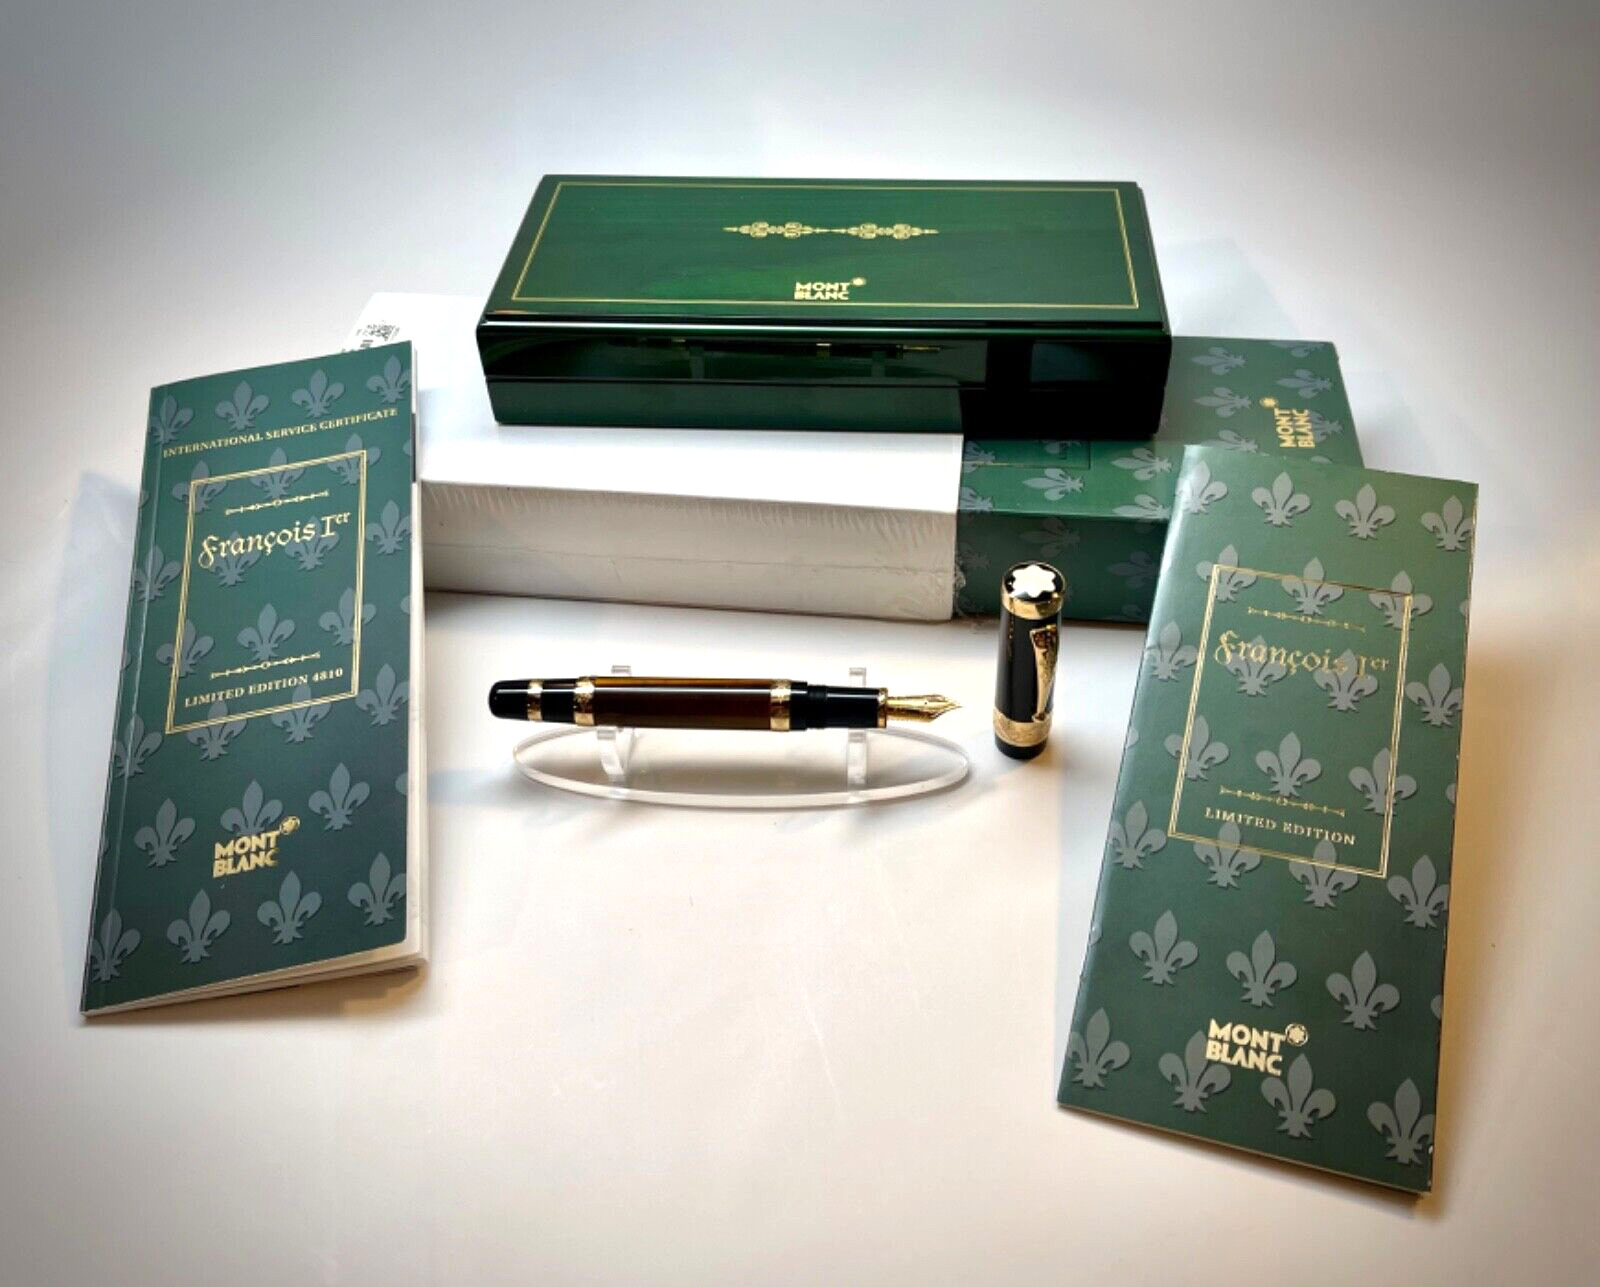 Montblanc Patron of Art Francois Limited Edition 4810 Fountain Pen, Original Box